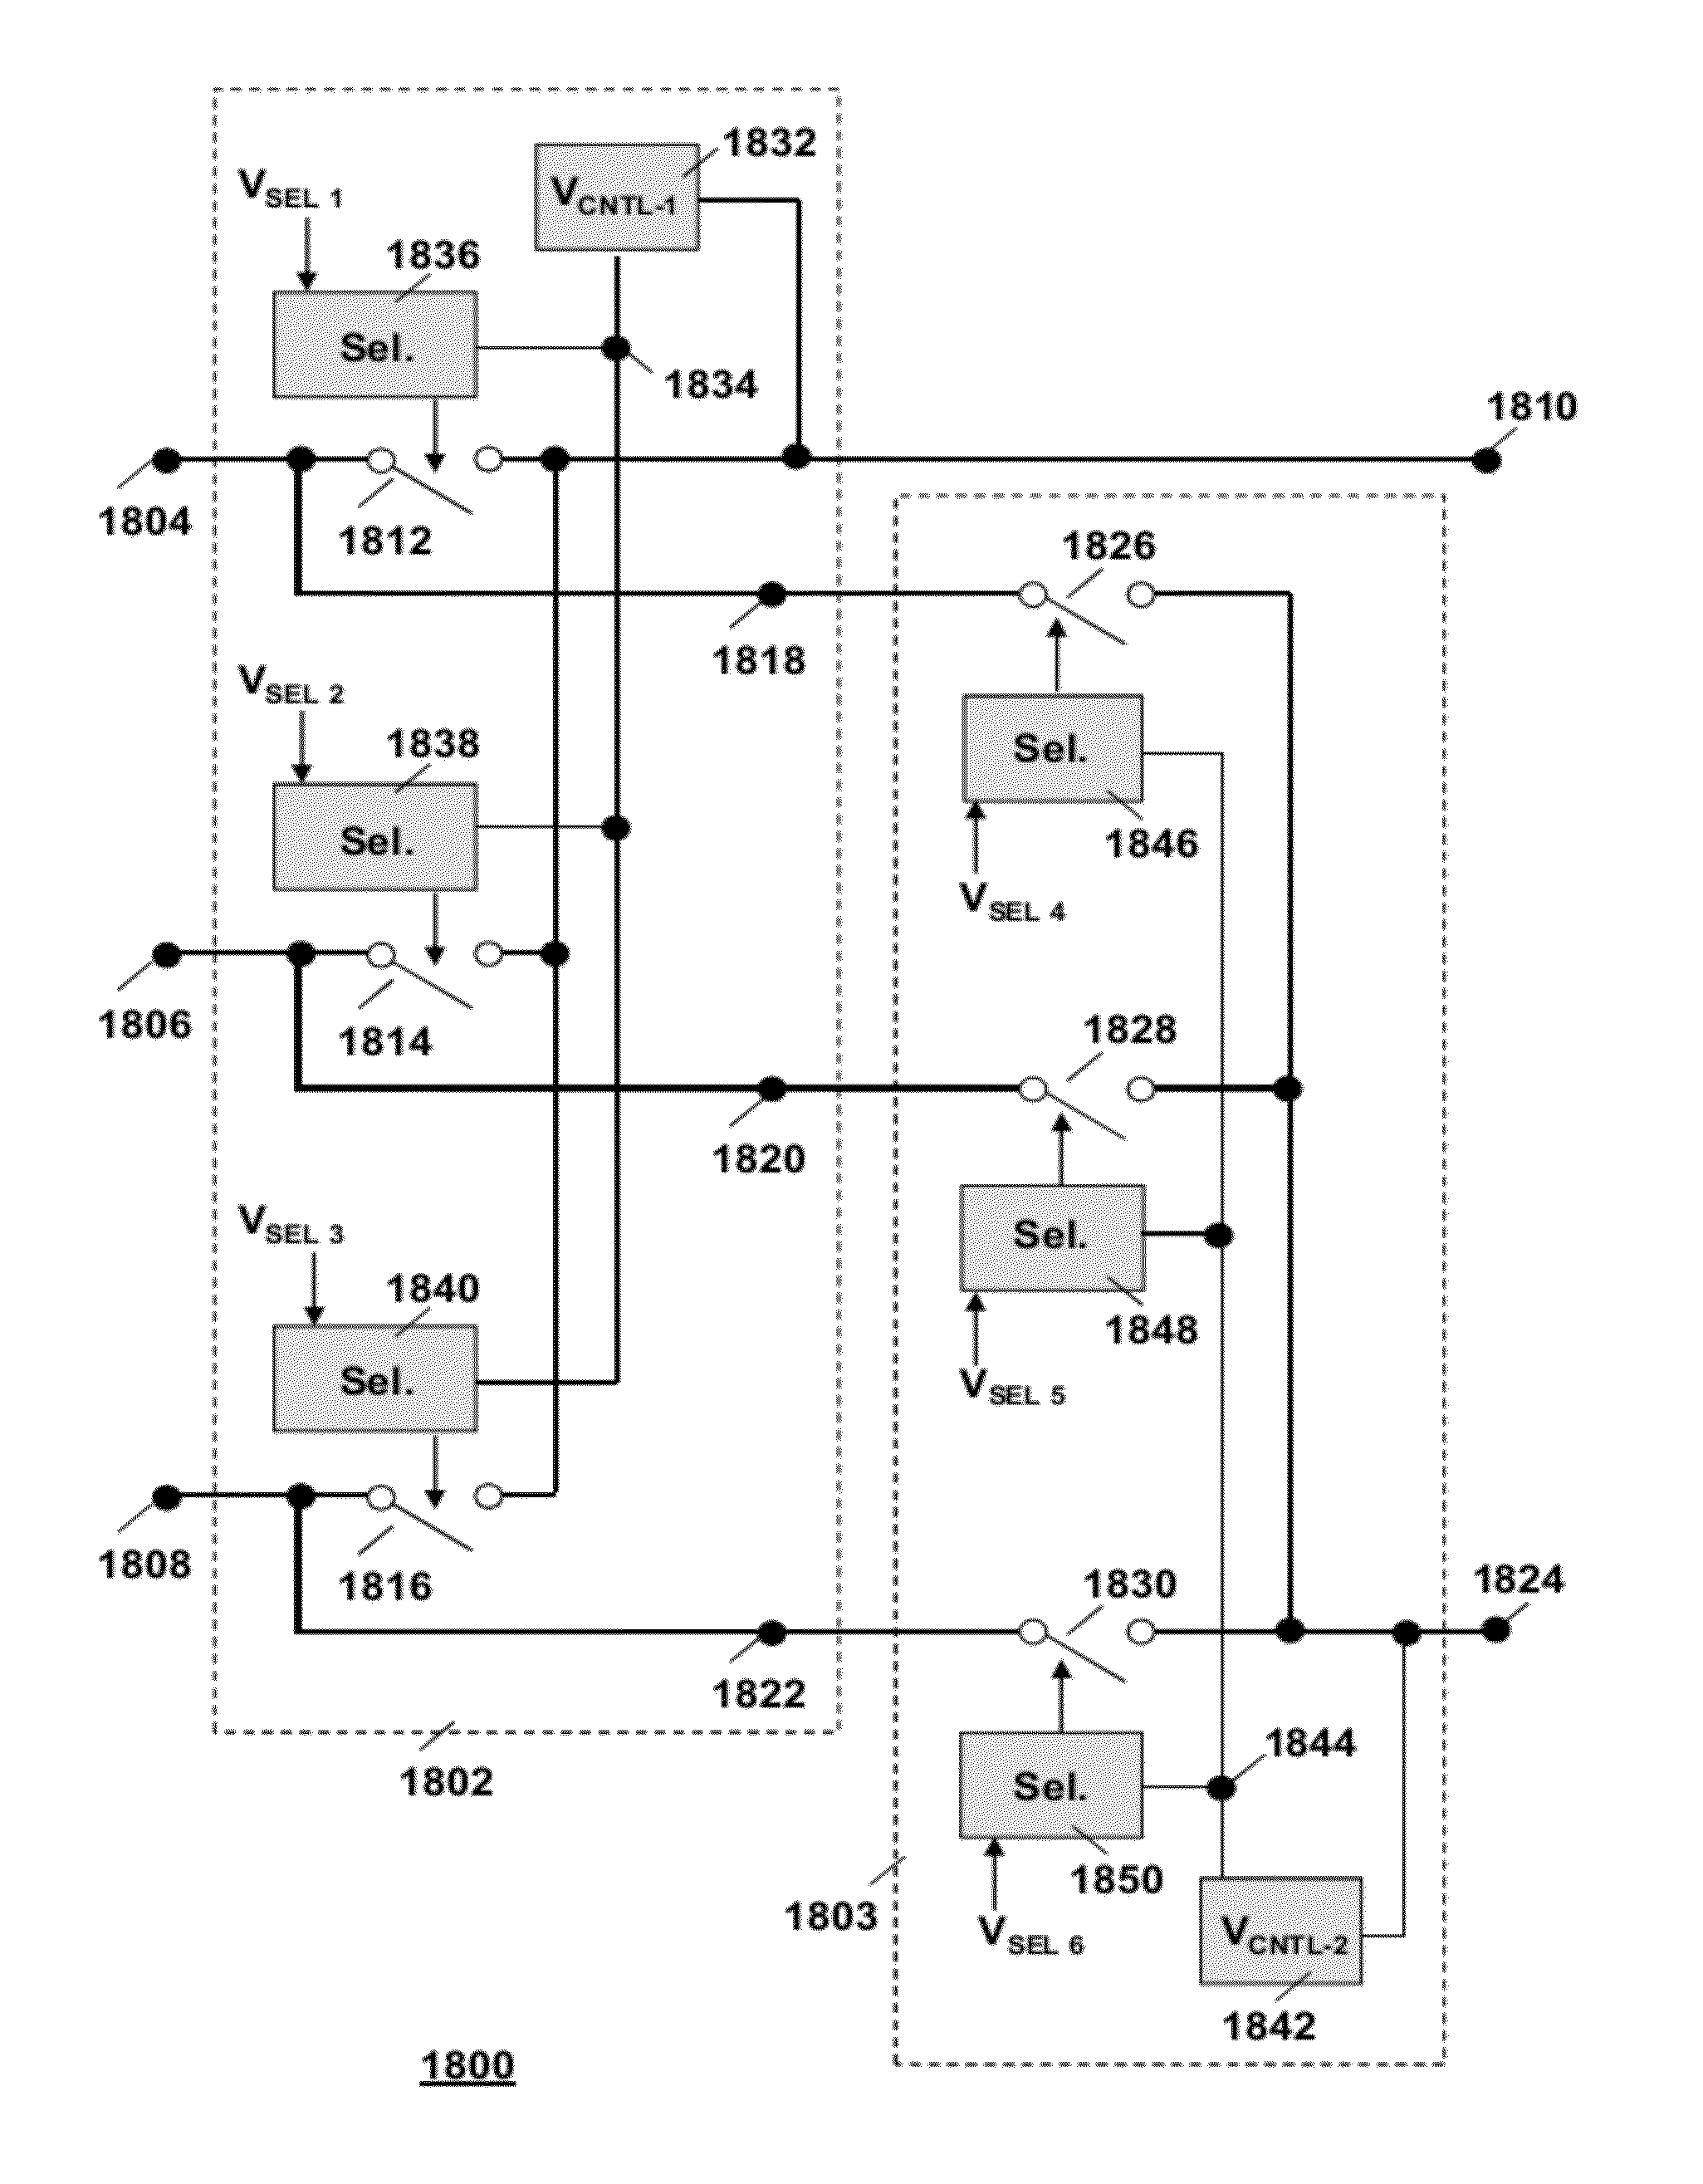 Control-voltage of pass-gate follows signal